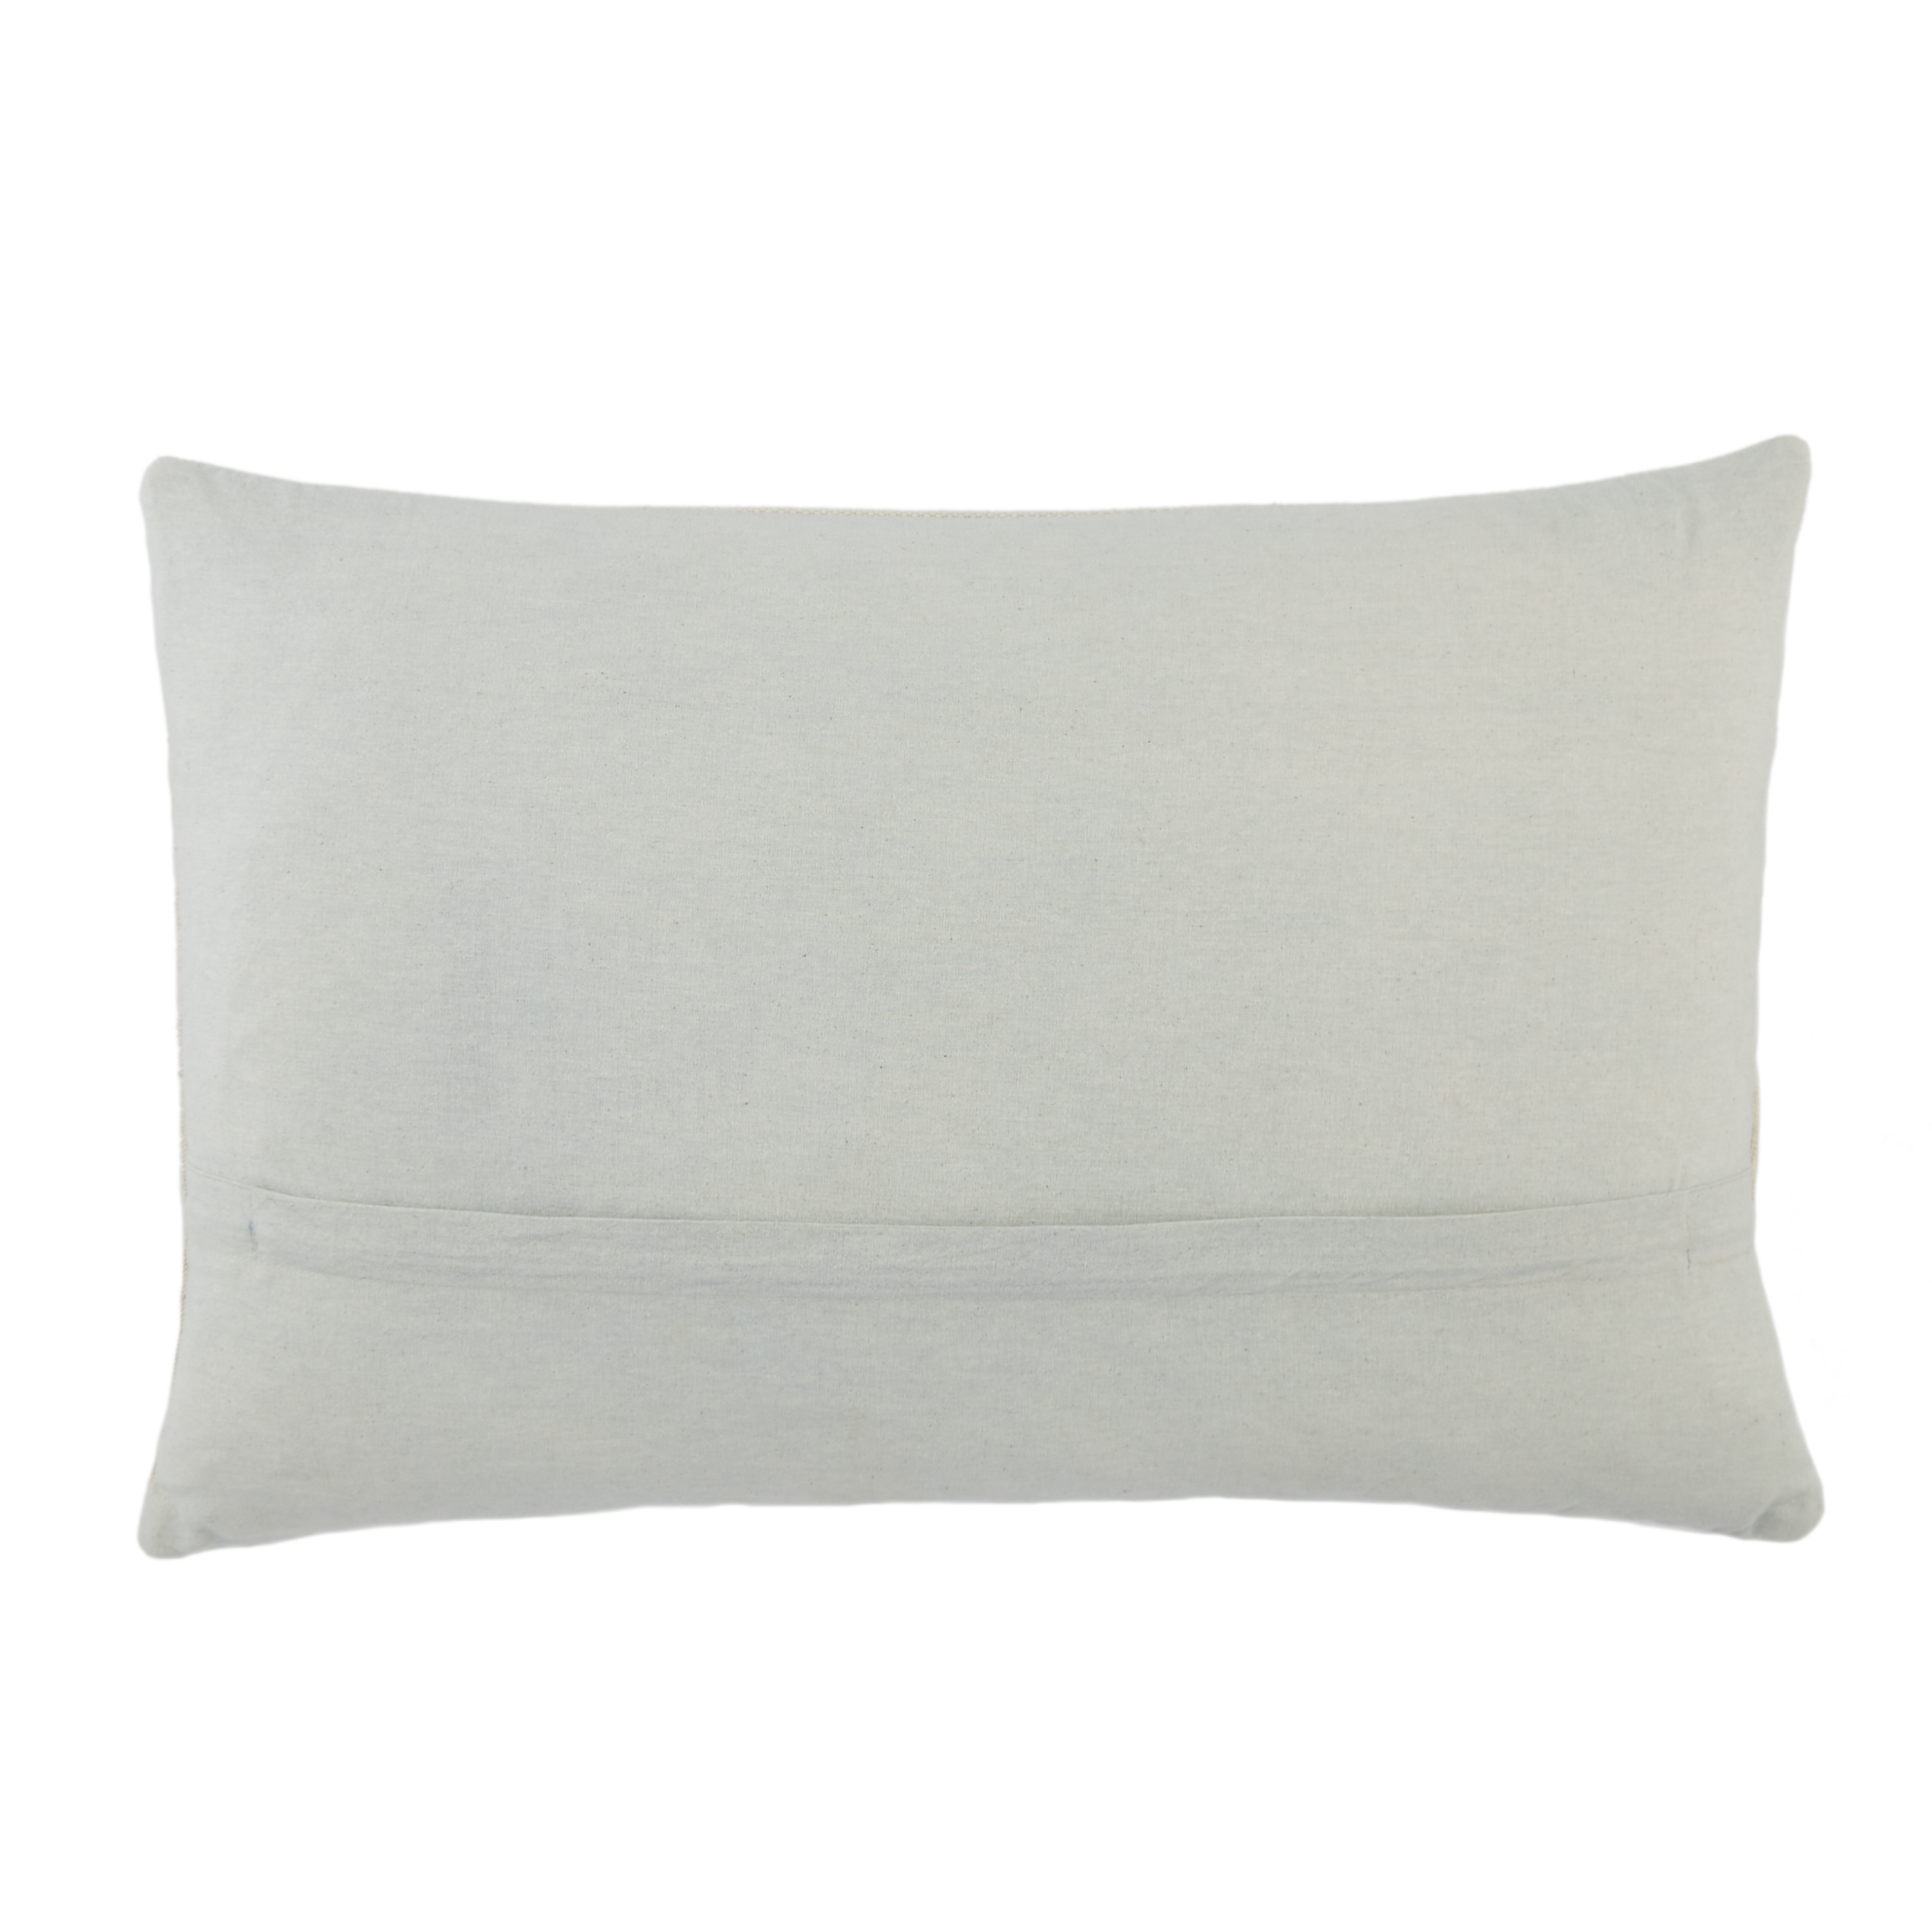 Design (US) Light Gray 16"X24" Pillow - Image 1